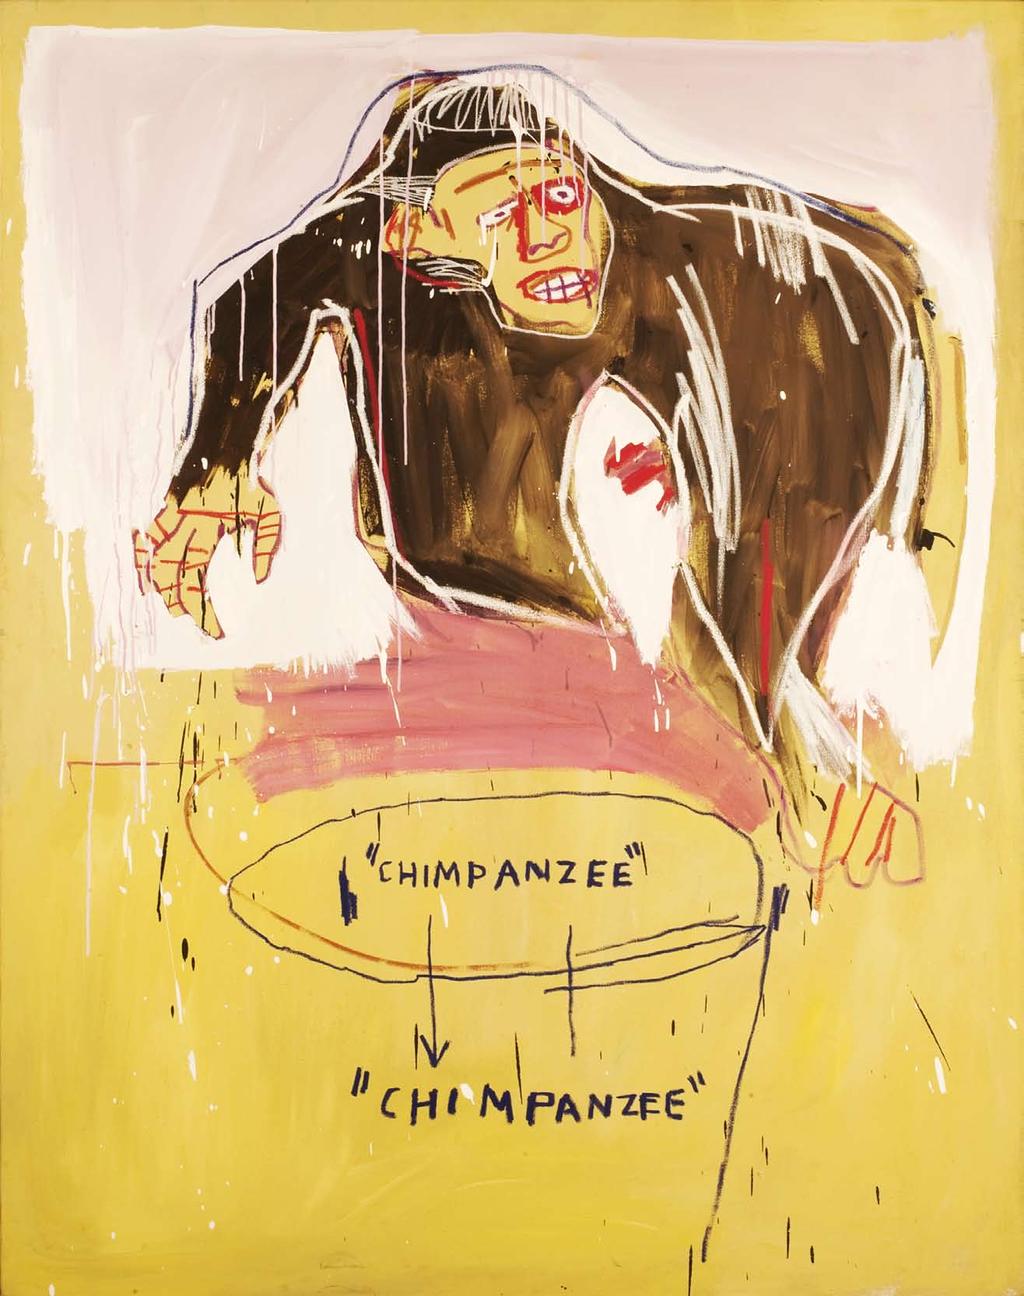 Jean-Michel Basquiat (1960-1988) 1960 년뉴욕브룩클린출신의바스키아는 1980 년대초미국, 독일을중심으로발생한신표현주의운동의주요한인물로손꼽힌다. 17 살에작가가되고자가출한후, 뉴욕지하철에기묘한그래피티를그려주목을받기시작했으며, 1983 년앤디워홀을만난이후, 그에게서많은예술적영감과함께정신적인위로를받게된다.